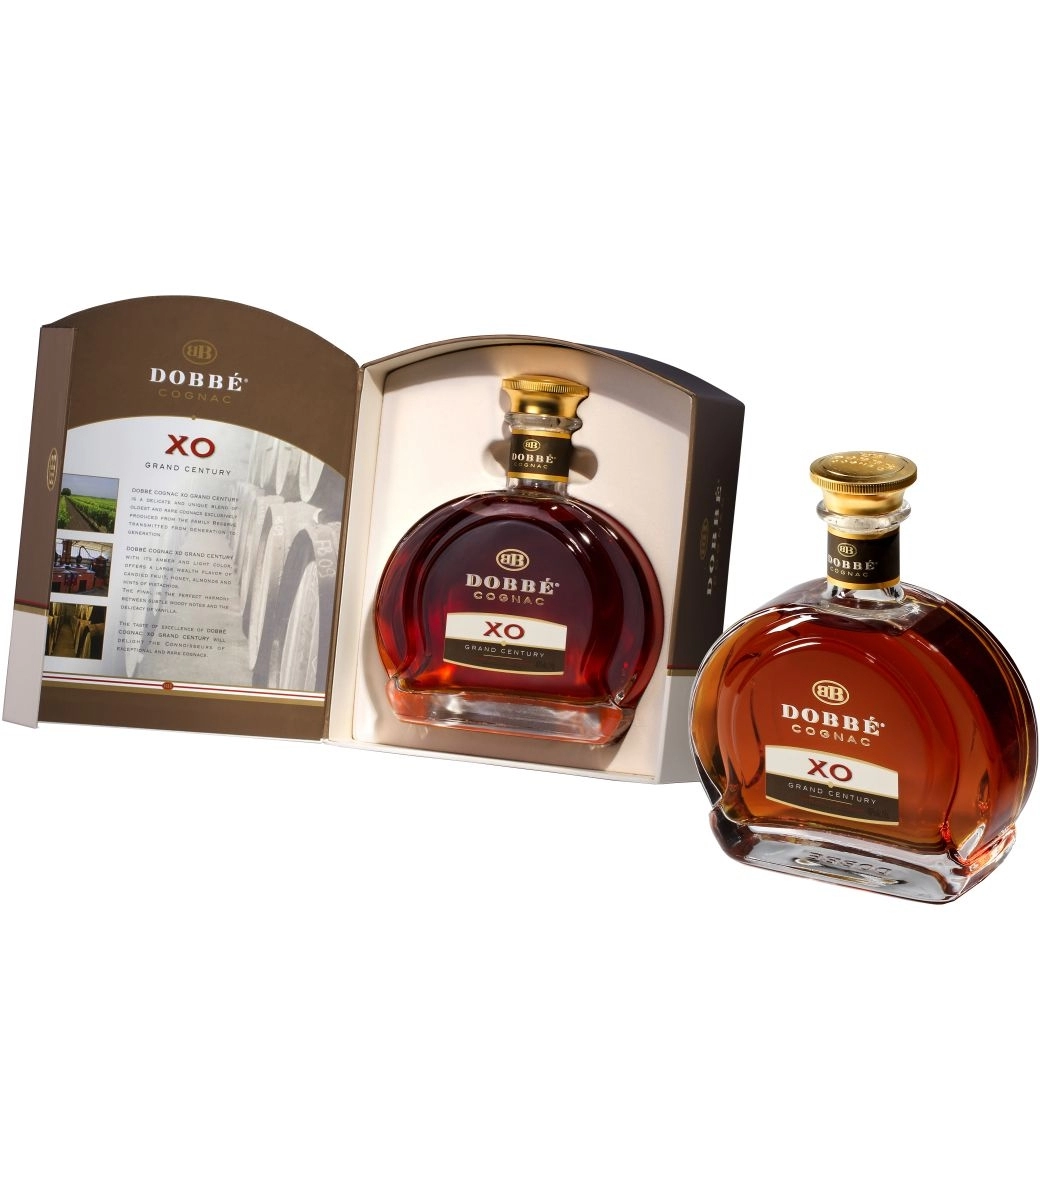  Cognac Dobbe XO Grand Century 0.7L